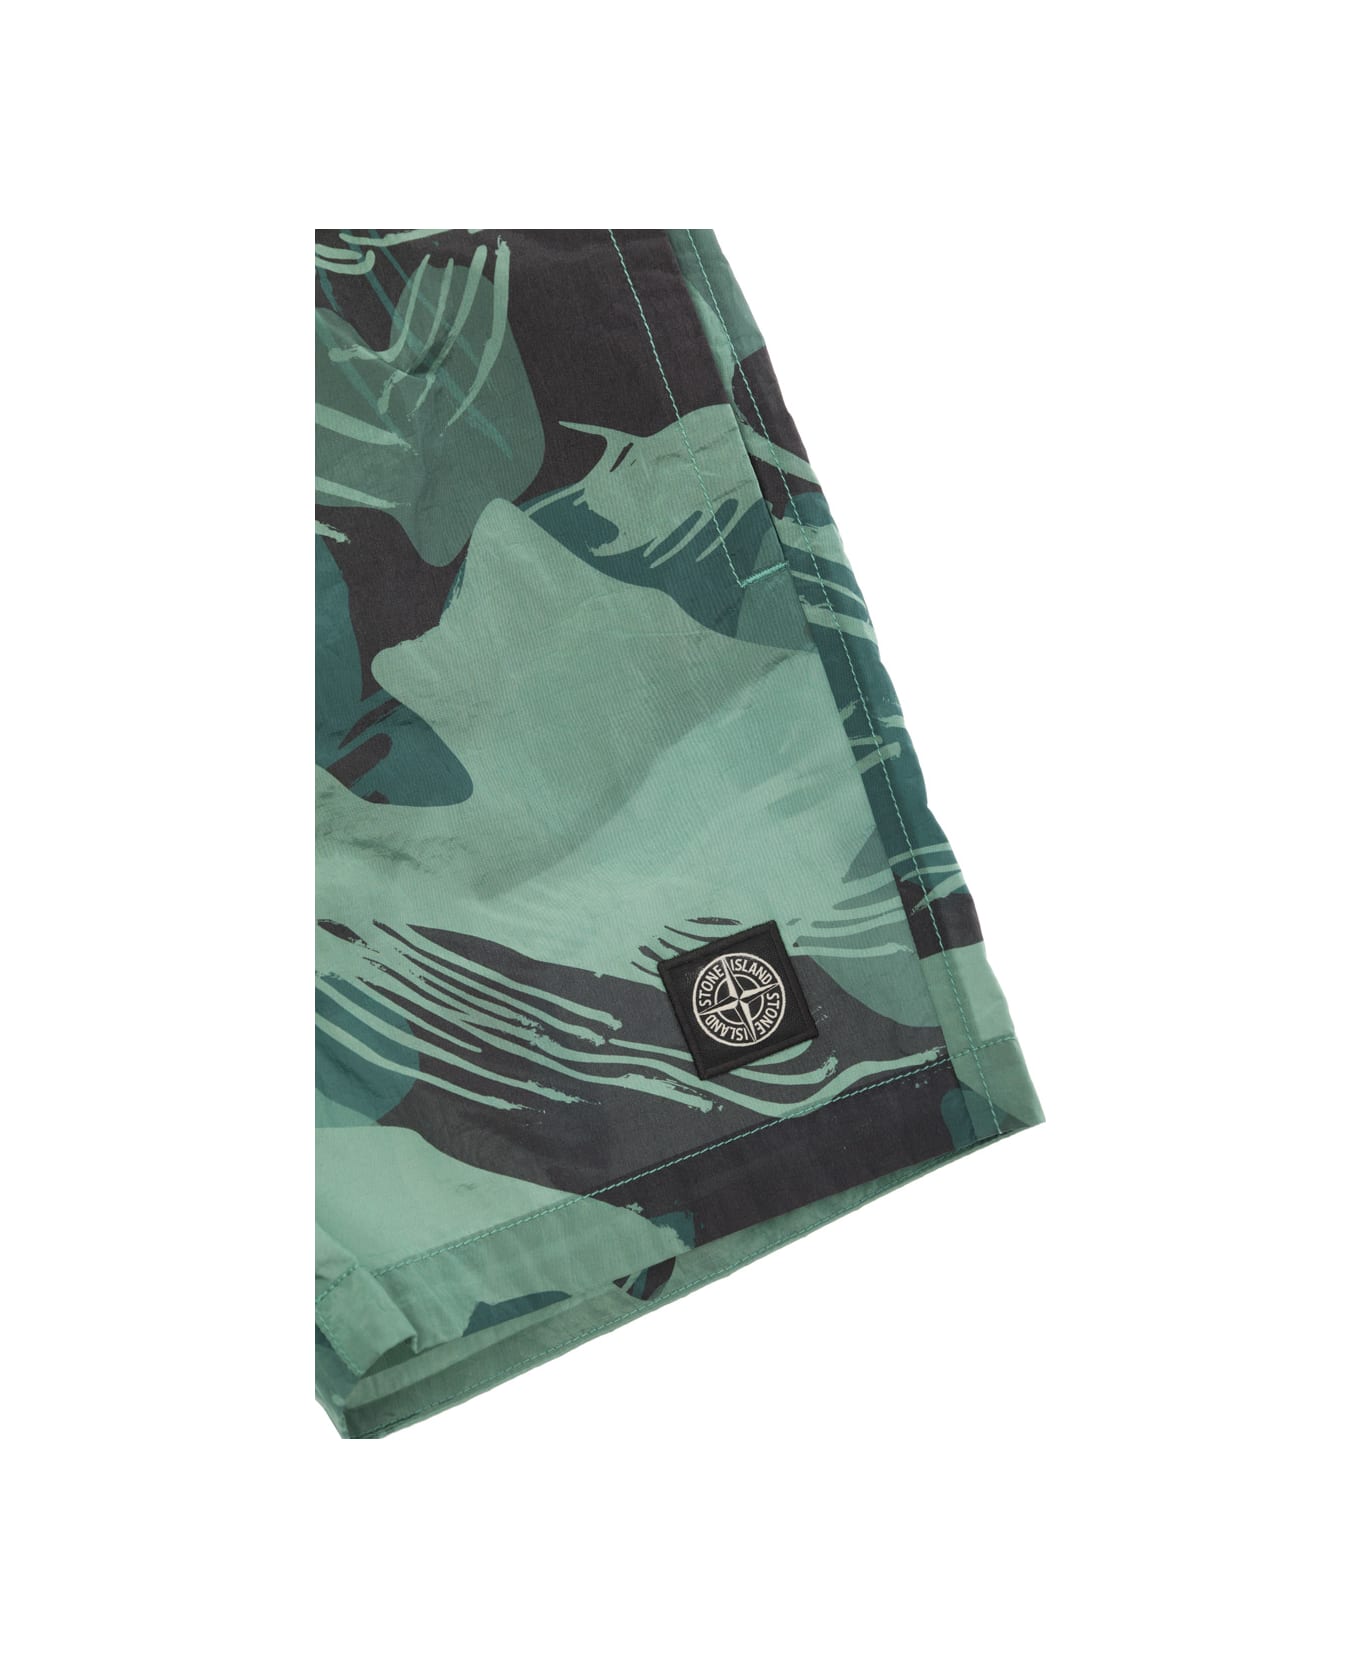 Stone Island Junior Grey Shorts With Camo Print In Polyamide Boy - Green